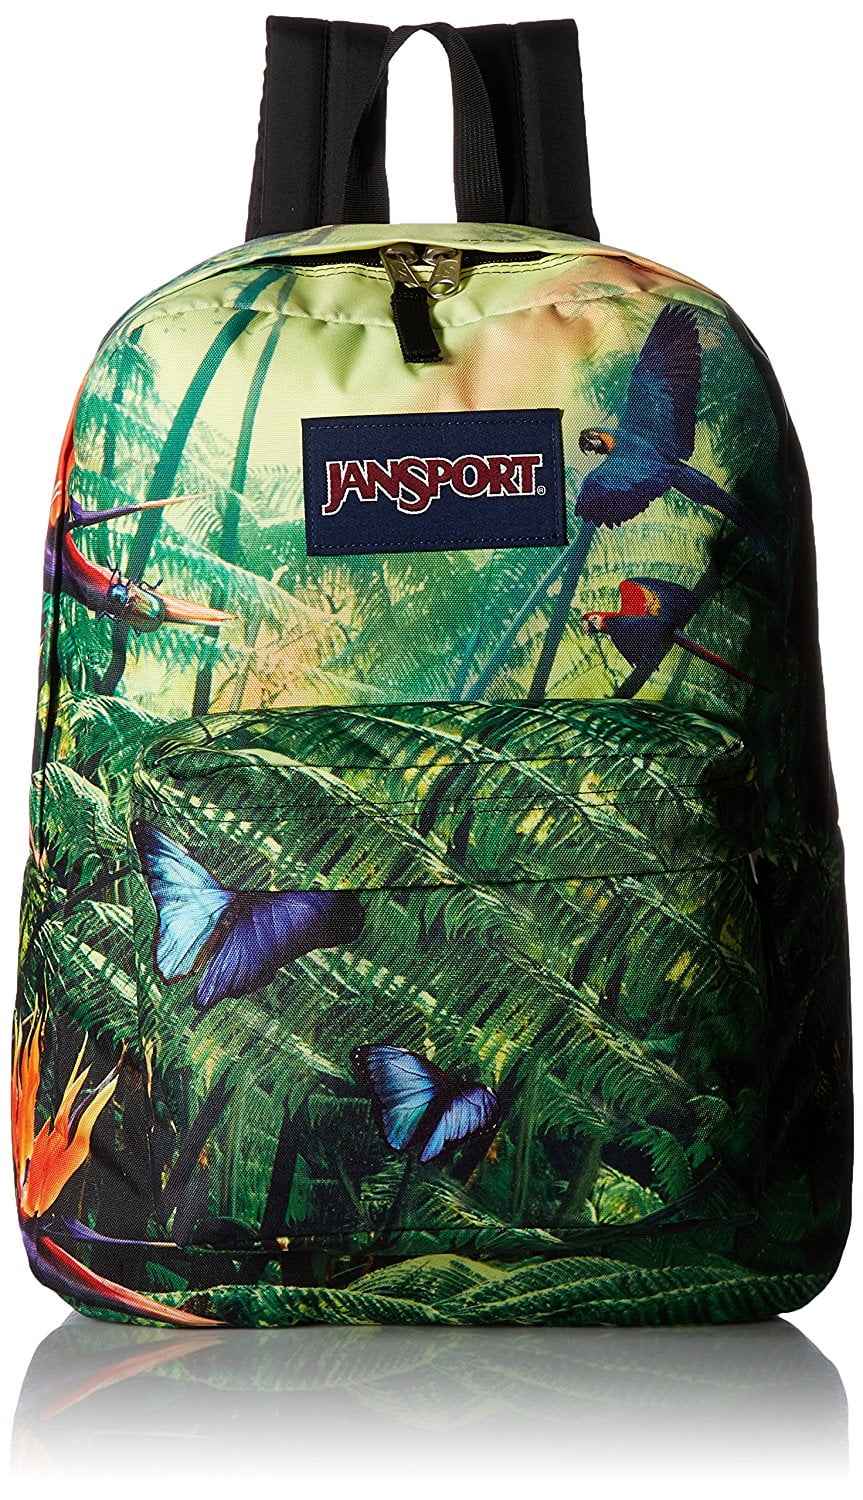 Jansport Backpack Style JS00t50134F  Black Neon print  BRAND NEW** 